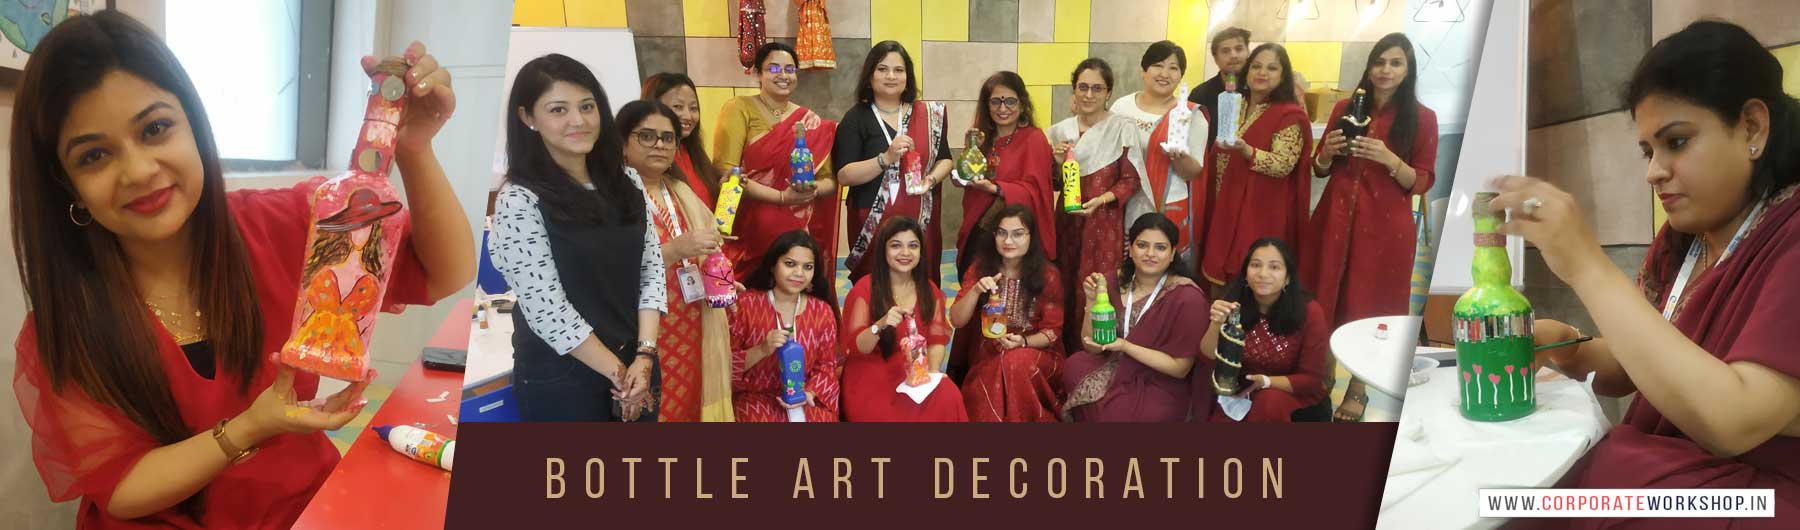 Drawing, Painting, Art & Craft Activities and Workshop for Corporate Employees, School Students, Collges, NGO, Club, in Delhi, Gurgaon, Gurugram, Noida, Chandigarh, Bengaluru, India